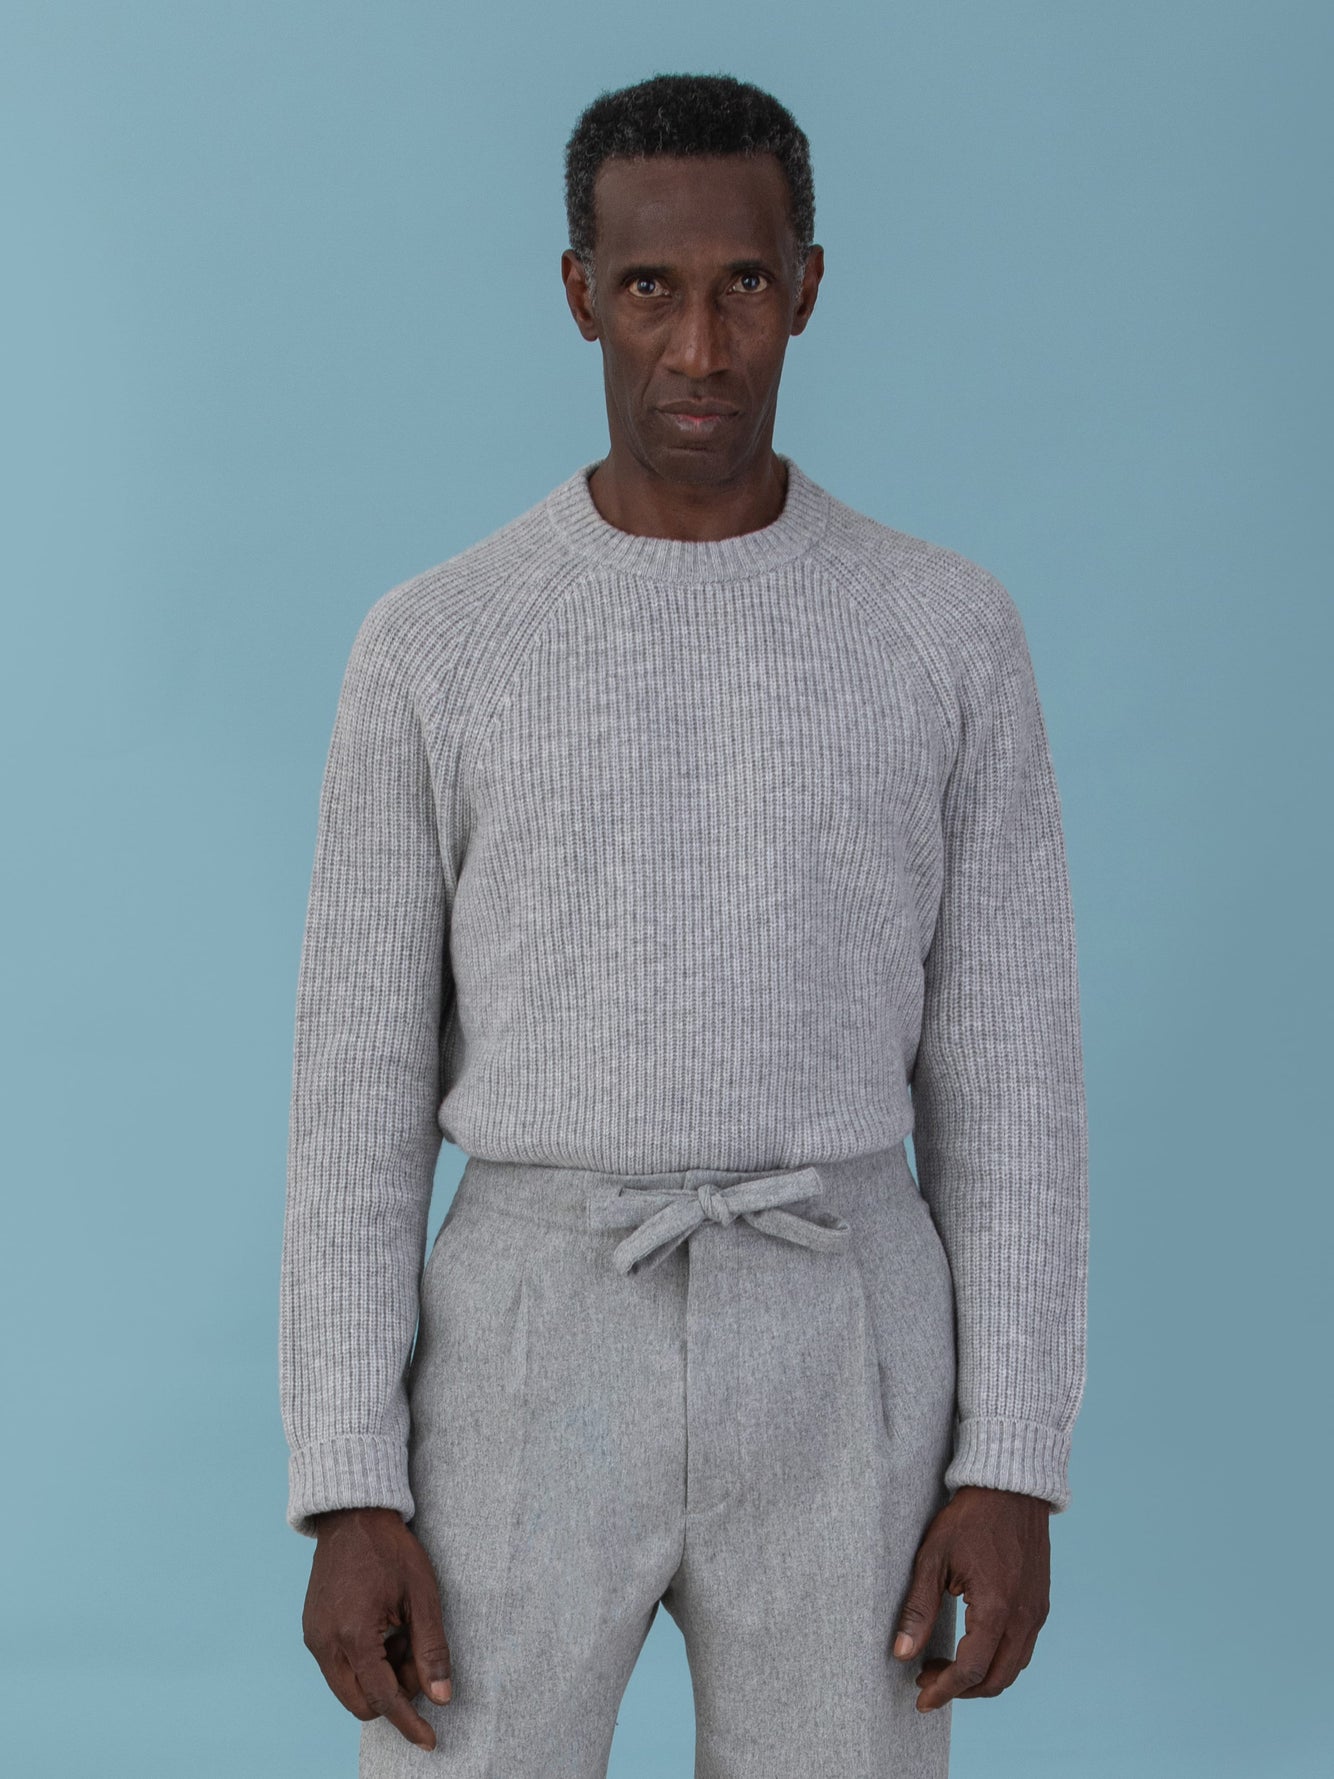 Cashmere Merino Crew Neck Sweater Green | WoolOvers